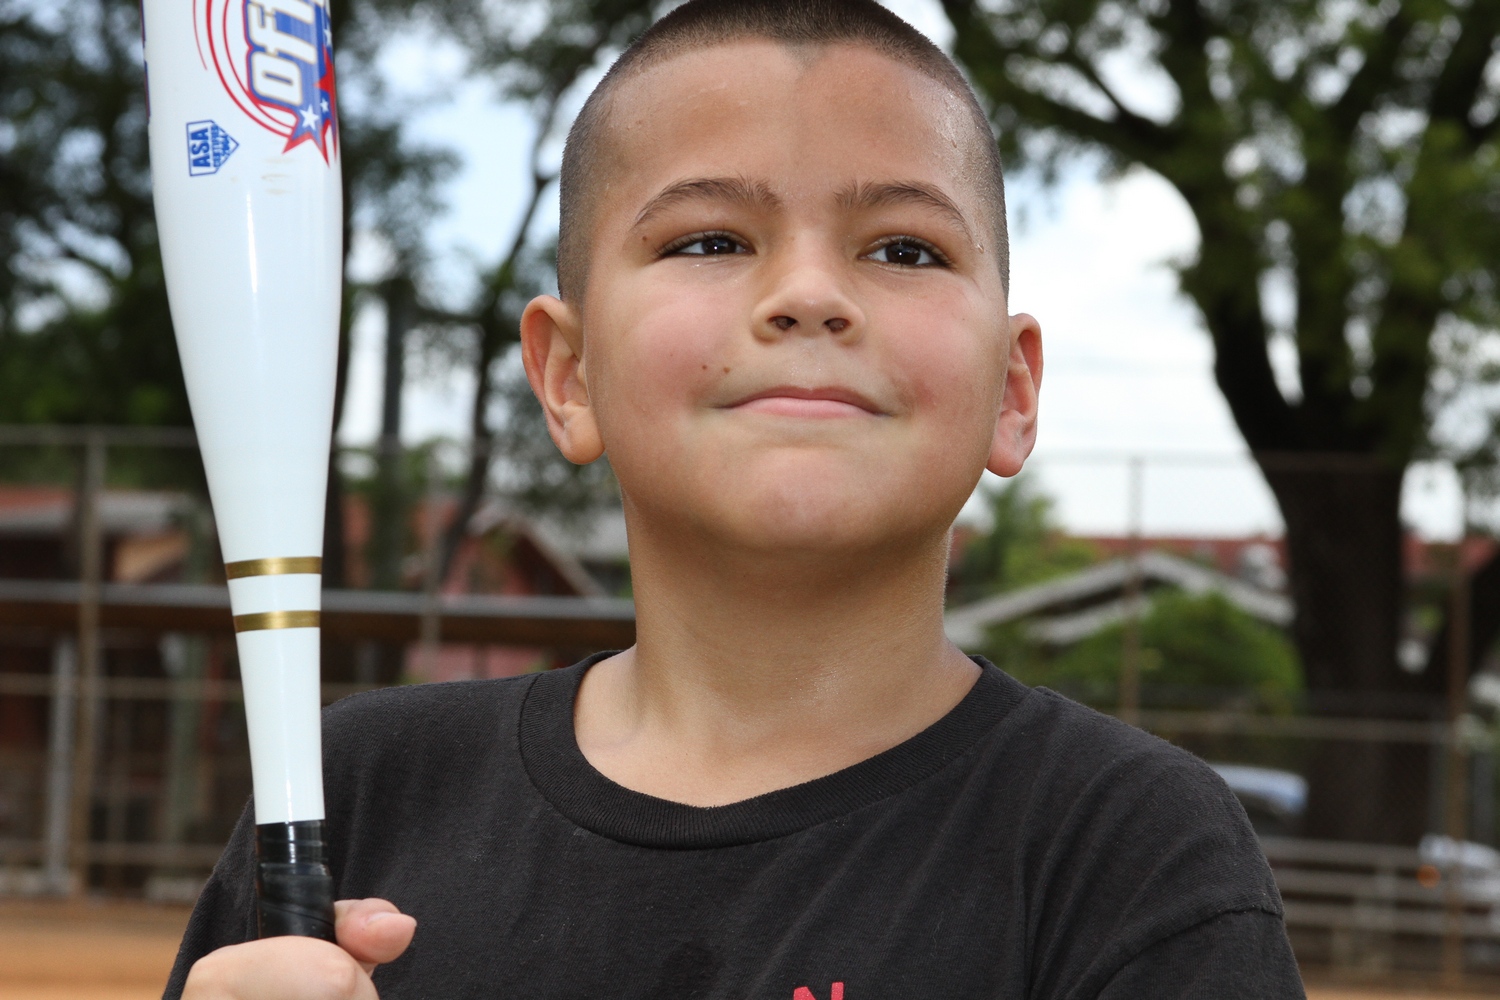 A Boy wearing a black shirt holding a baseball bat.